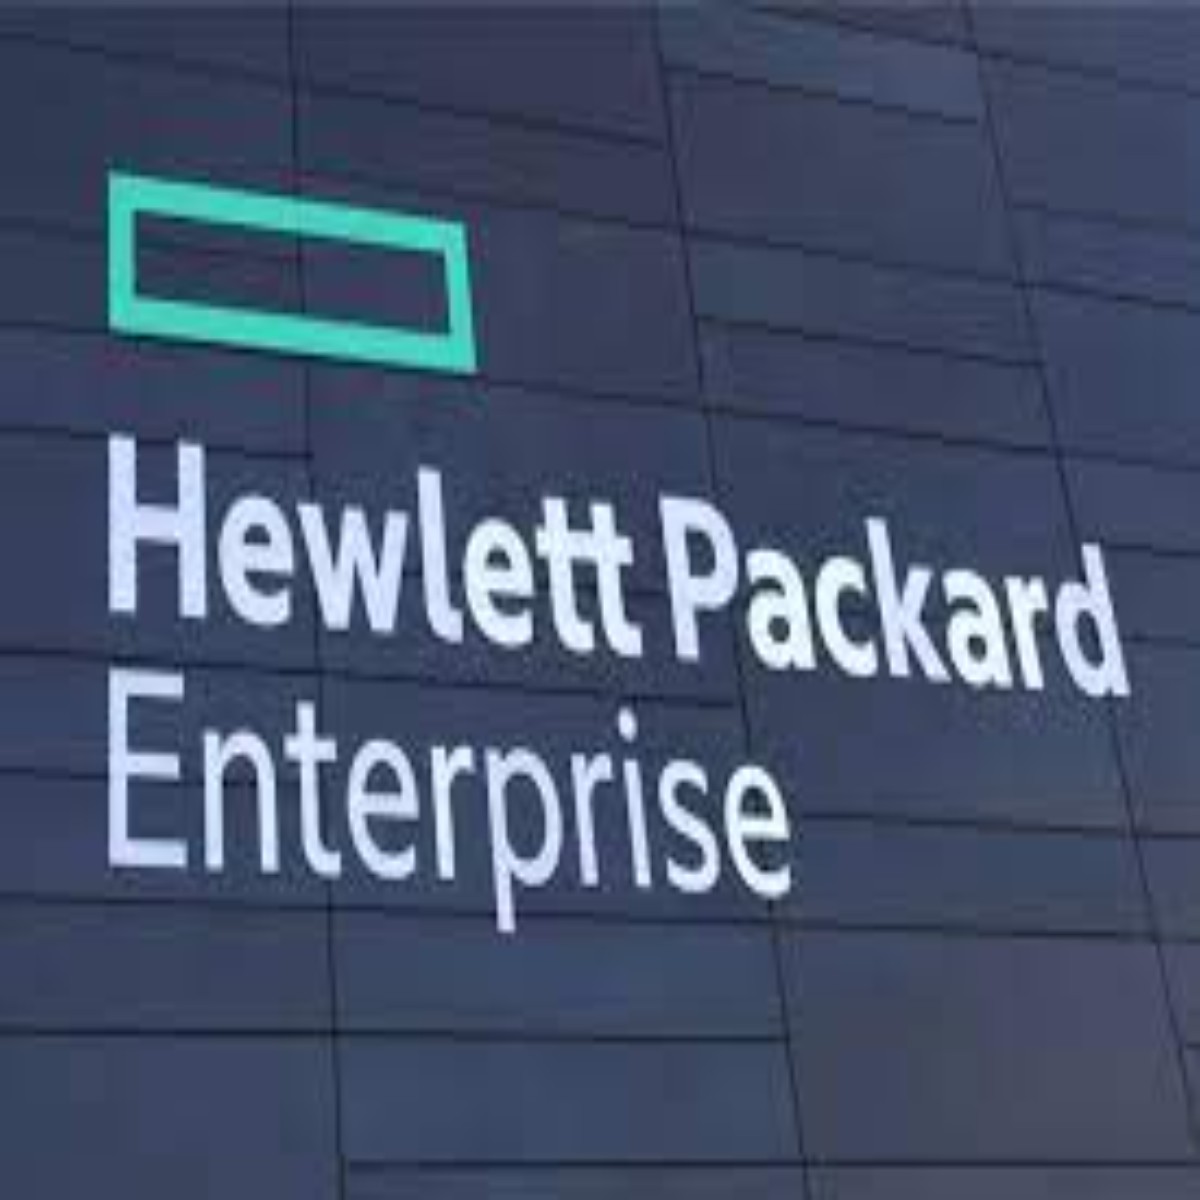 Hewlett Packard 2023 Enterprise Careers Internships for Young Graduates